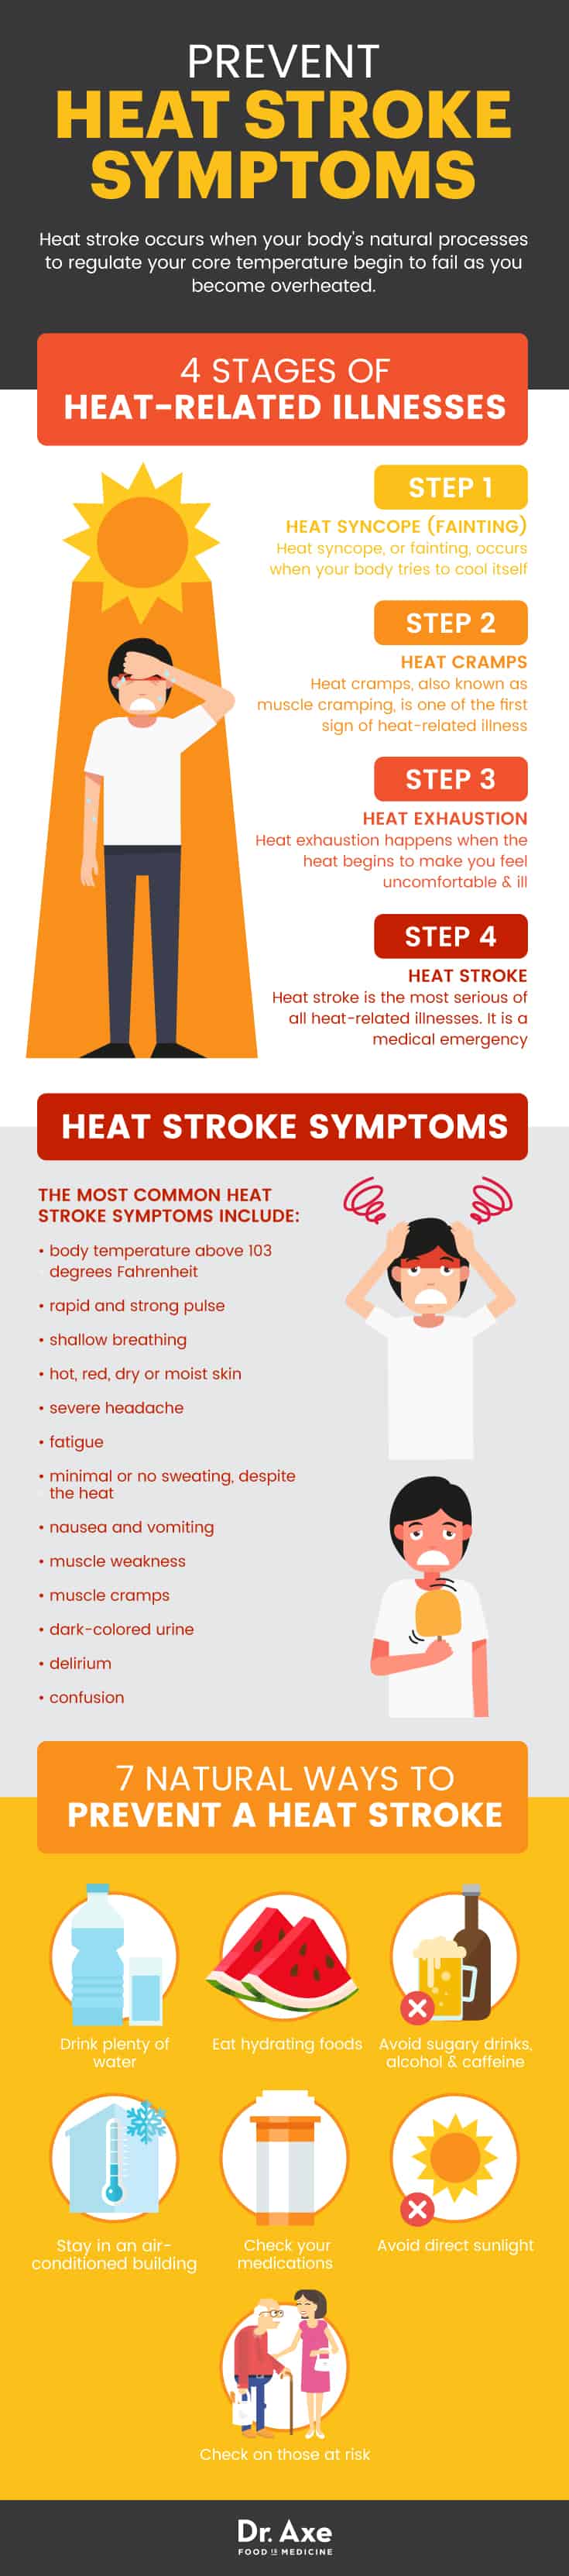 Prevent heat stroke symptoms - Dr. Axe